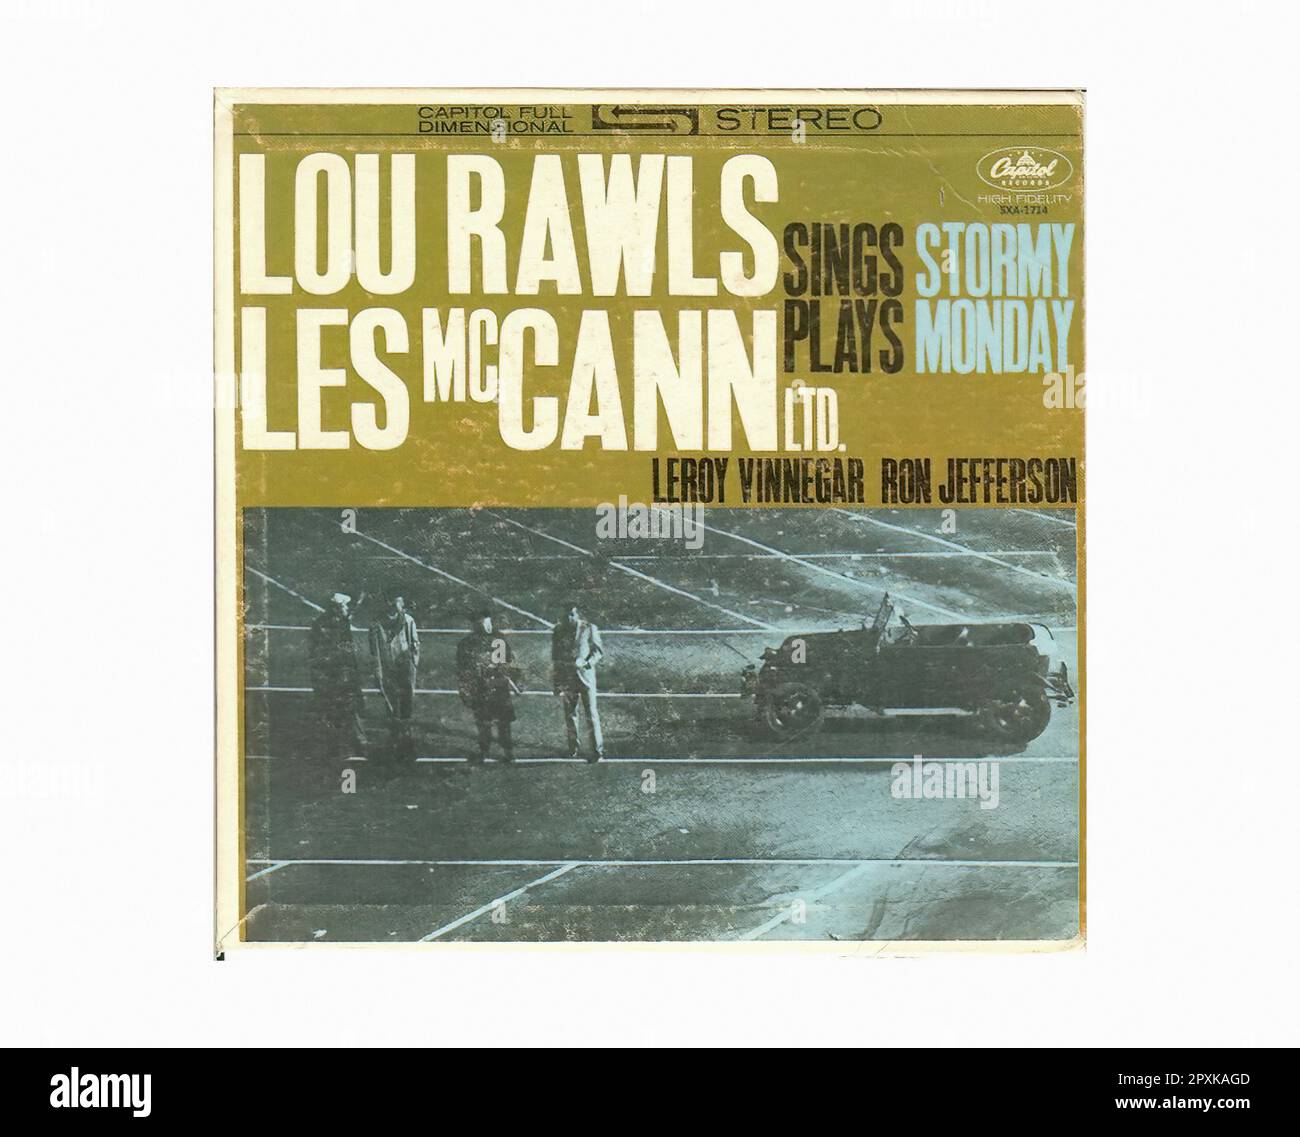 Rawls Lou & Mccann Les - 1966 05 A - Vintage 45 R.P.M Music Vinyl Record Stock Photo